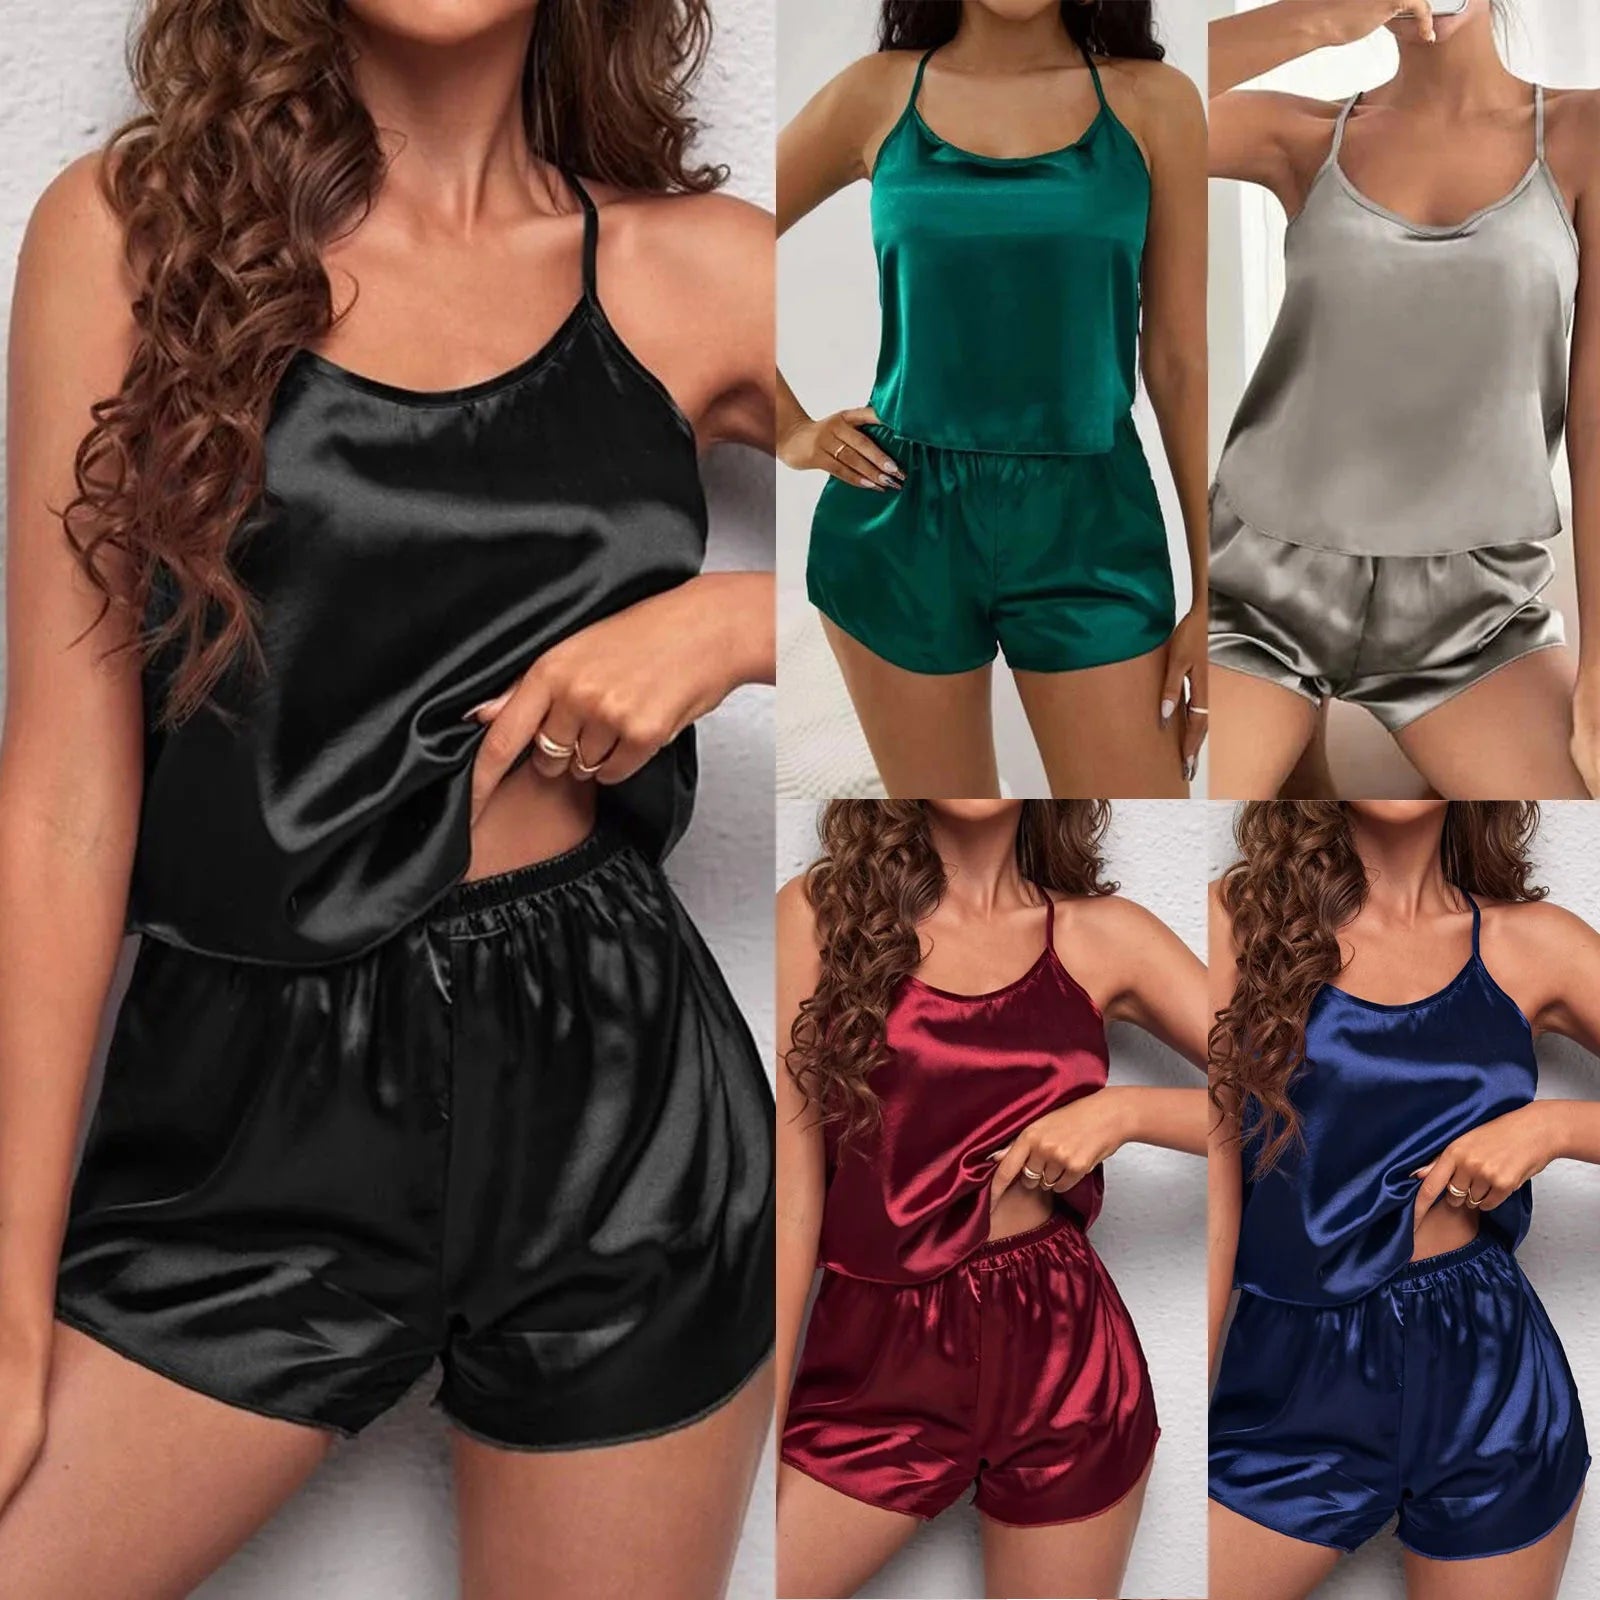 Women's Sleepwear Sexy Lace Satin Pajama Sets Nightwear Sleeveless Tops+Shorts 2Pcs Sets Pyjama Sets for Women Pijama Night Suit